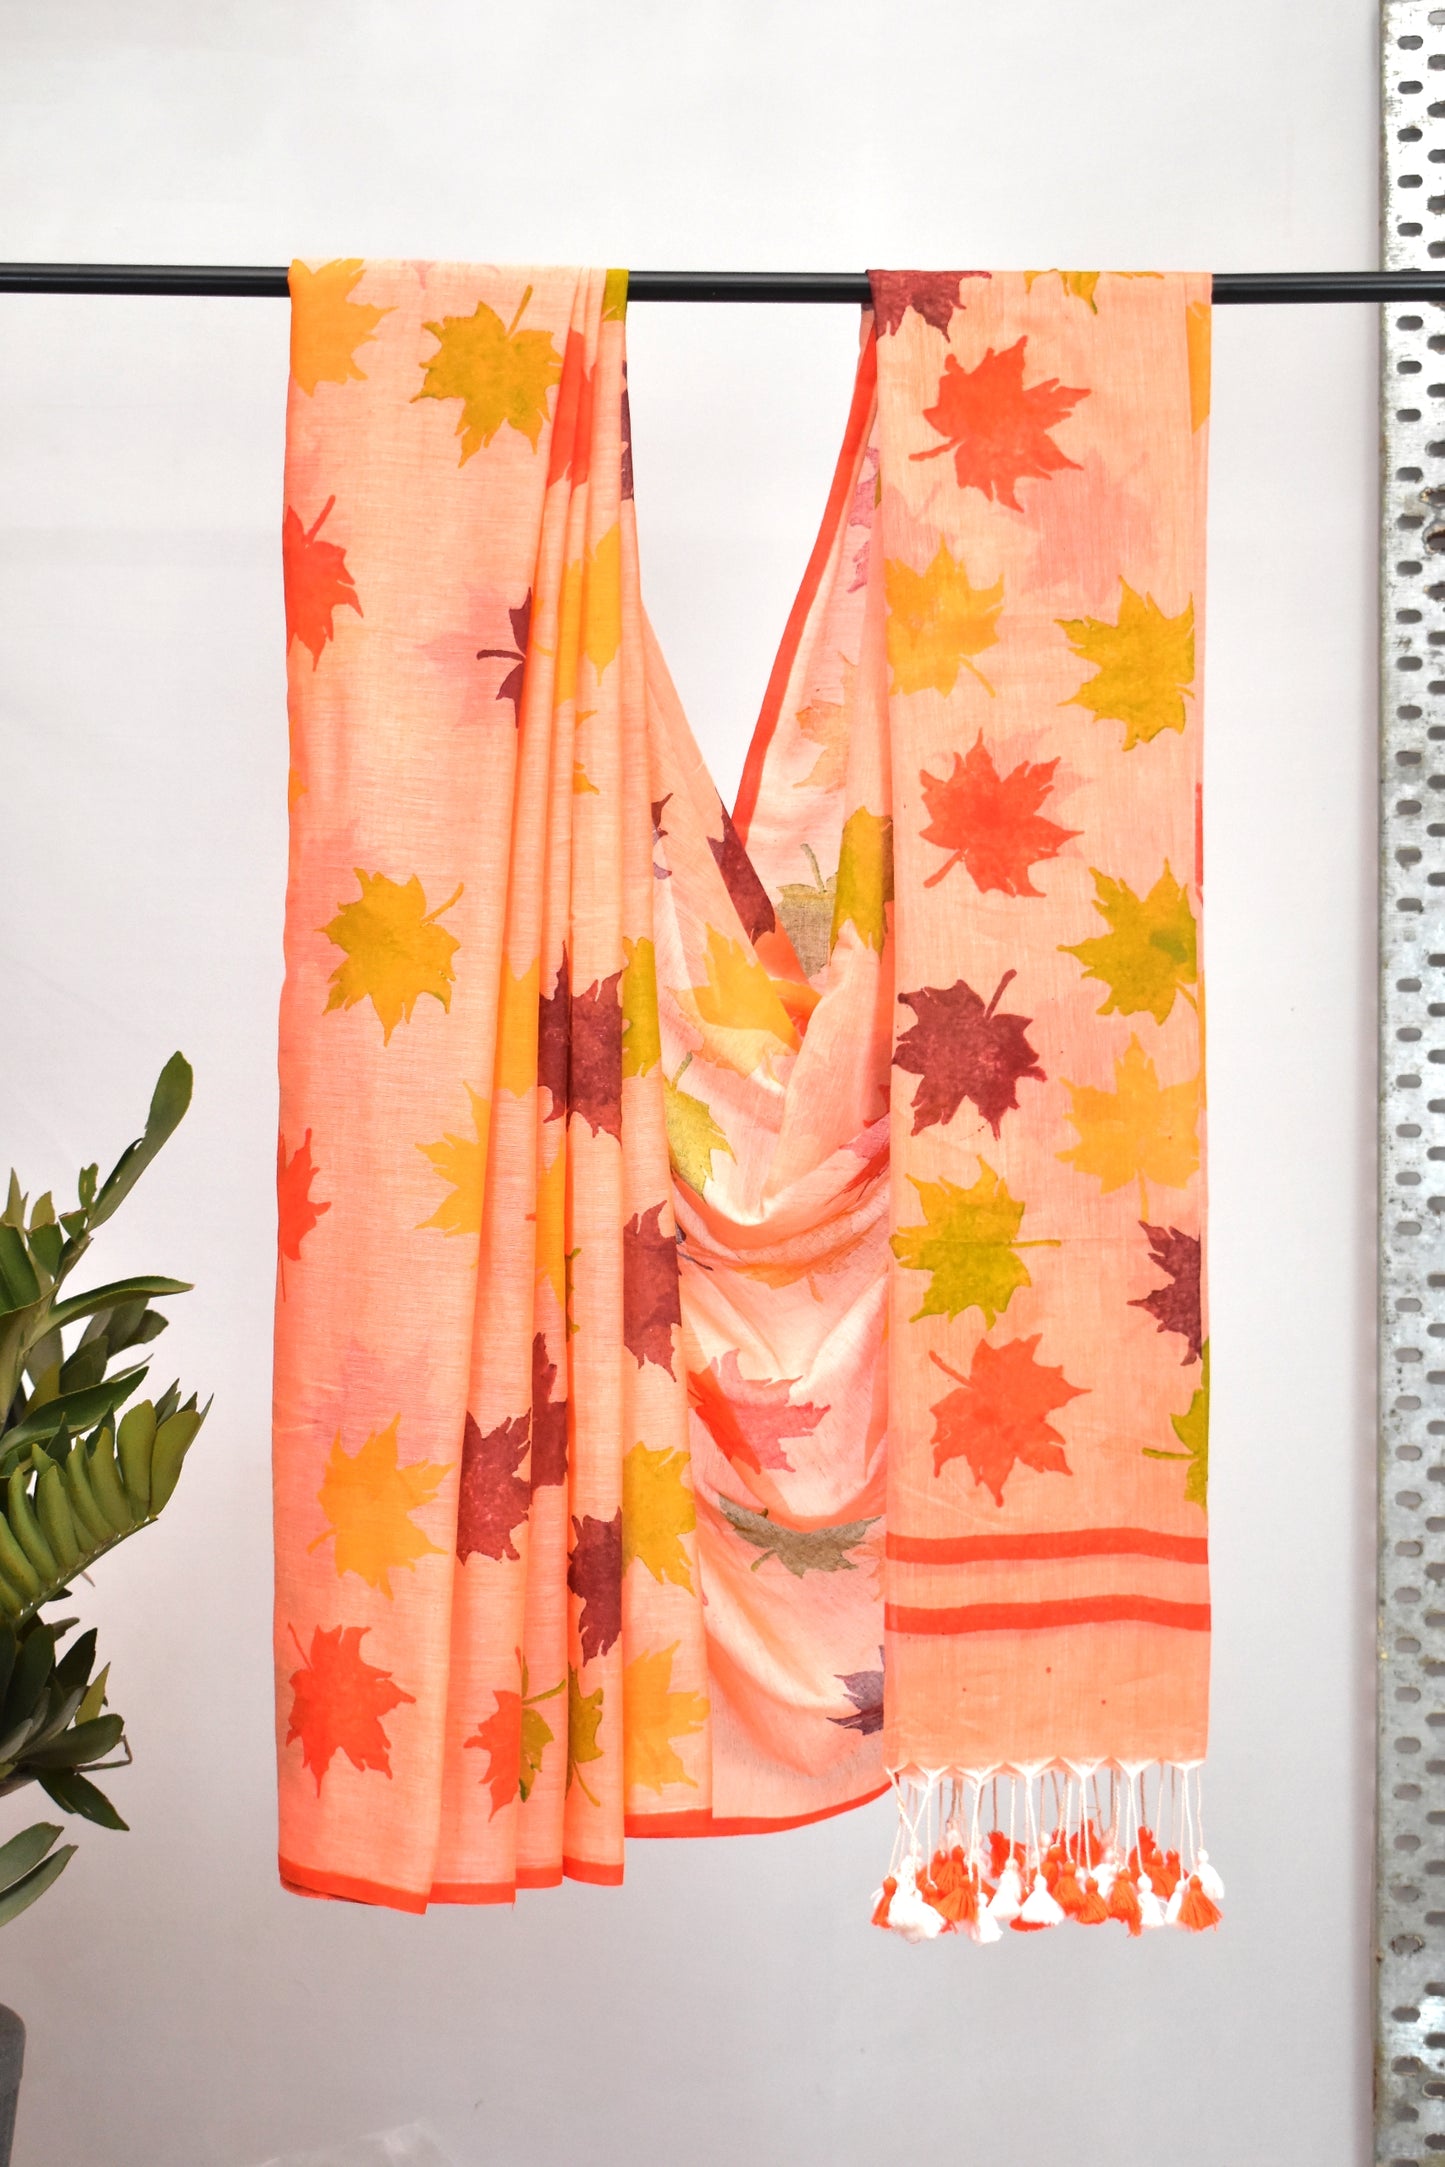 Handloom Soft Cotton Saree with Block Prints & Tassles, Peach, SR1002